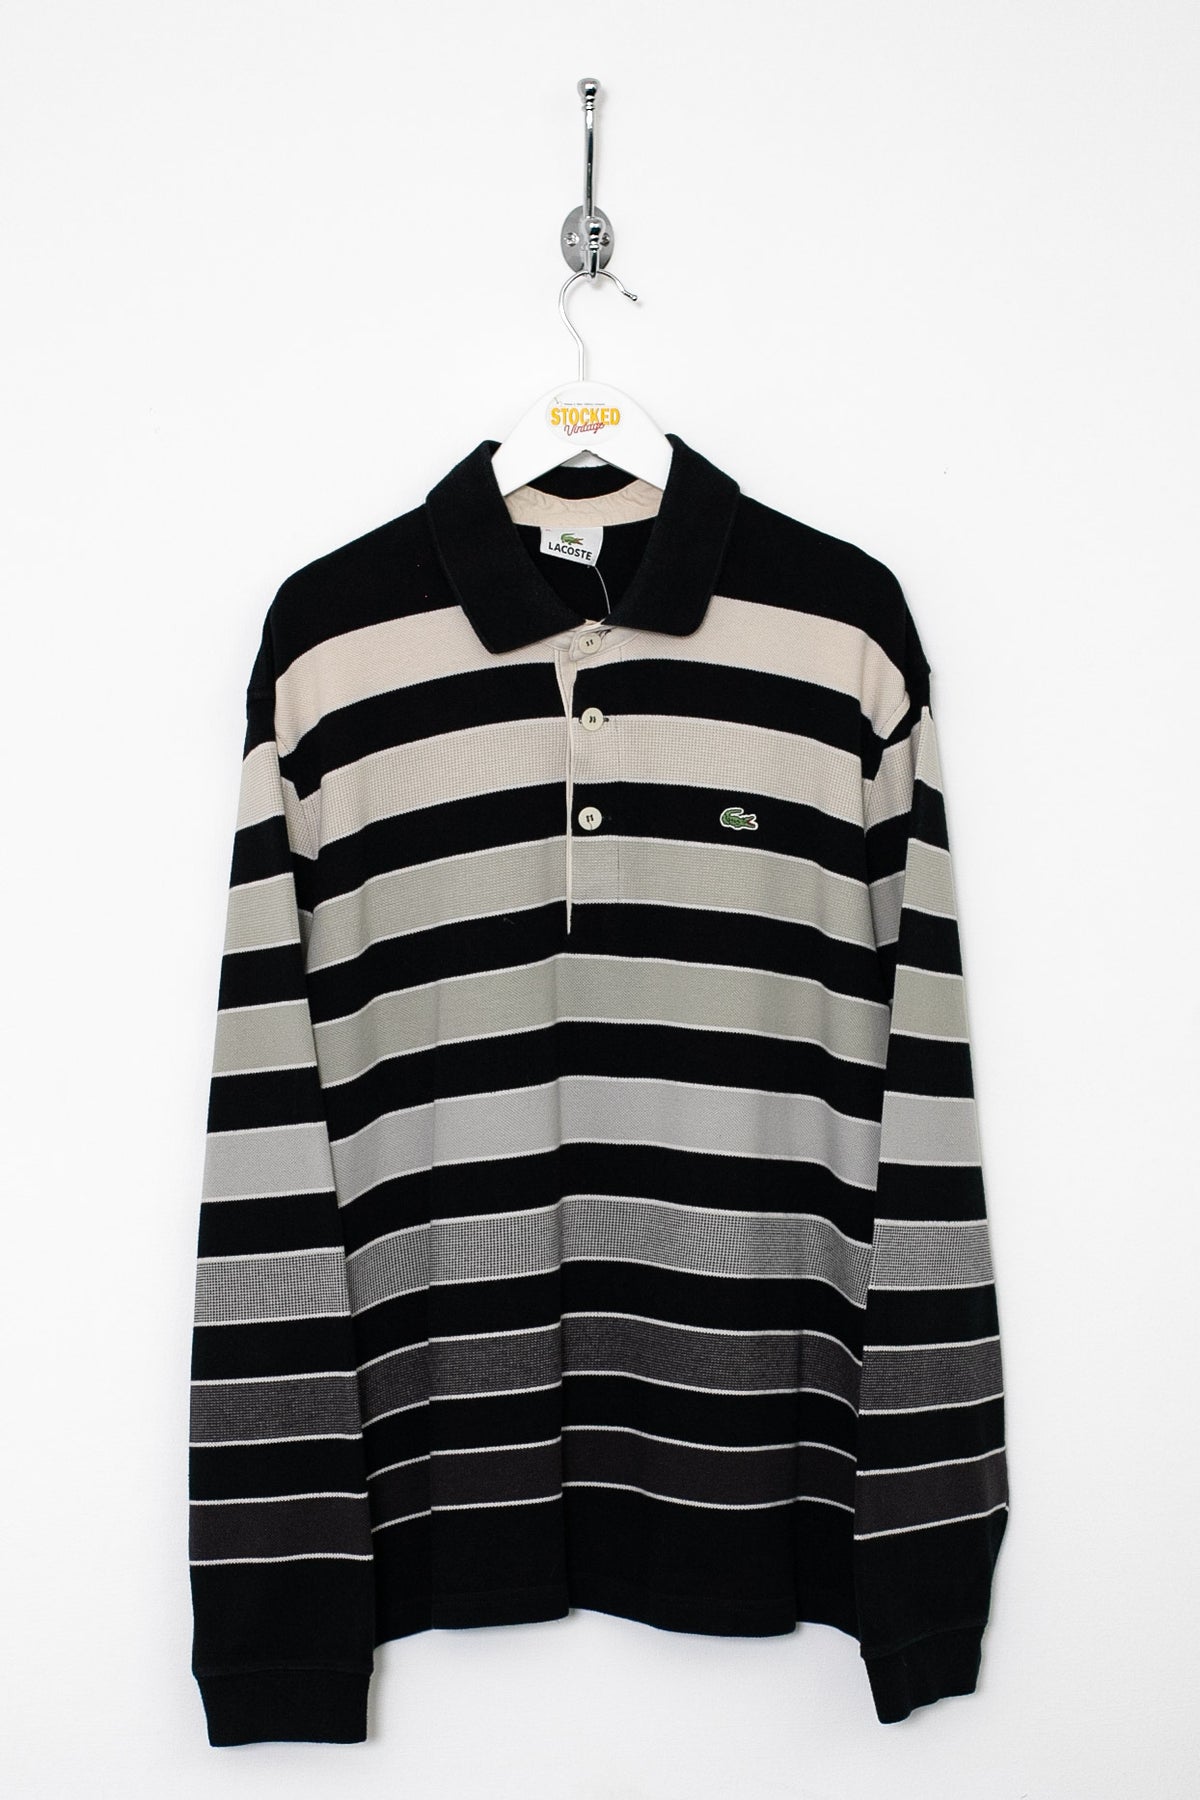 00s Lacoste Long Sleeve Polo Shirt (L)